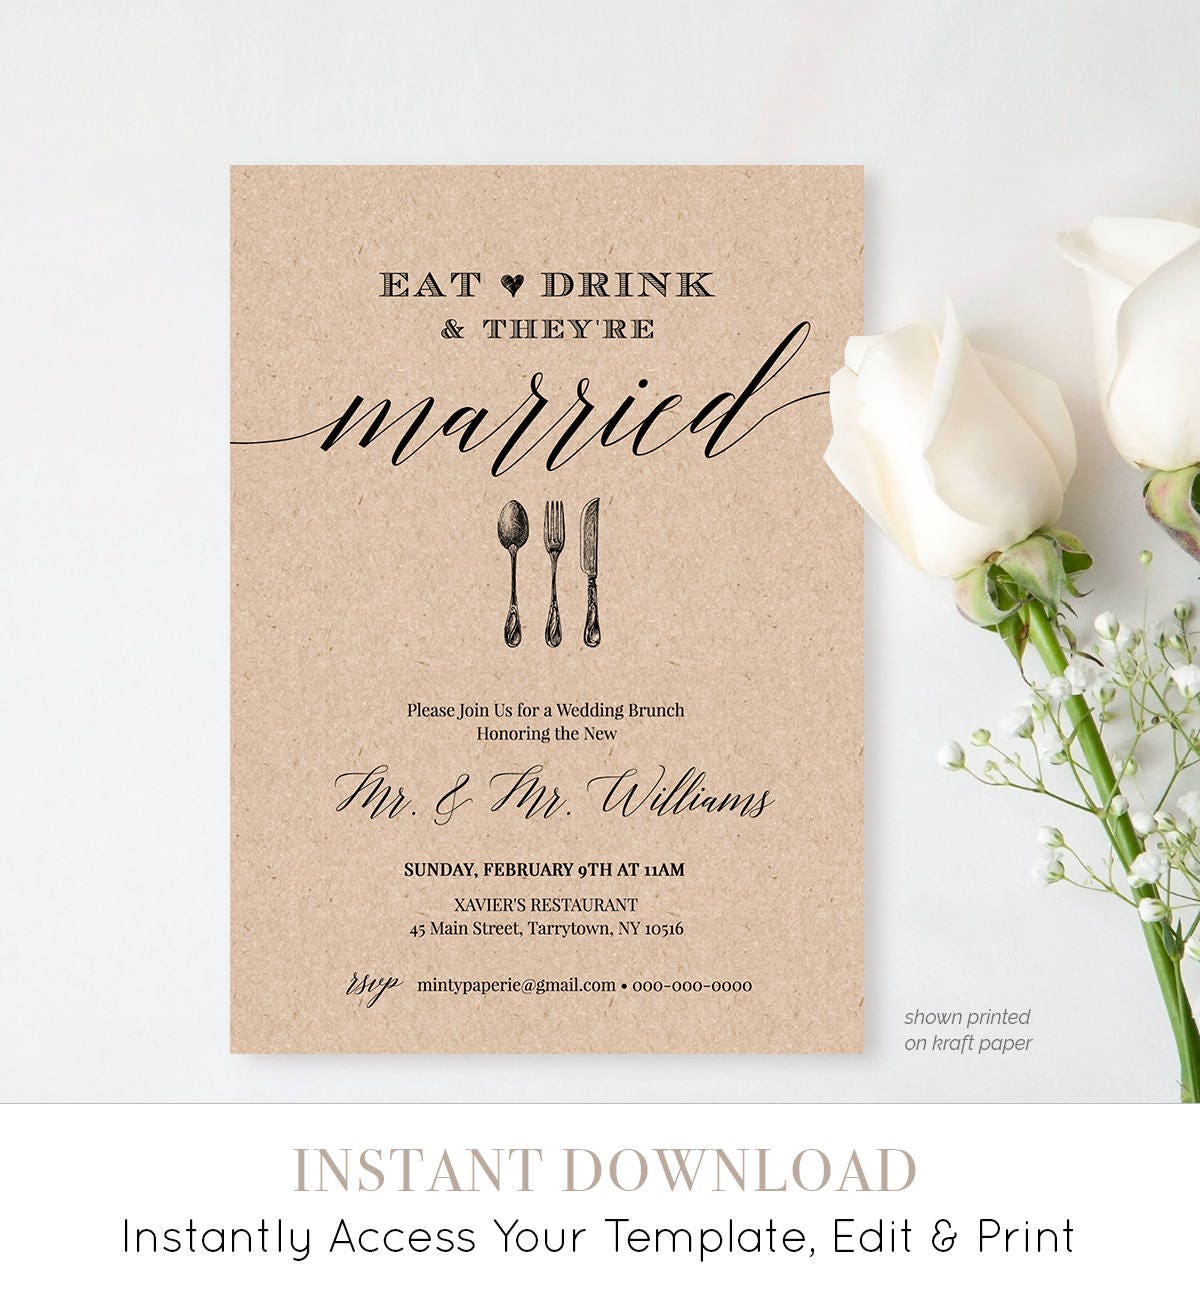 Post Wedding Brunch Invitation Template, Printable Brunch Invite, Eat Drink Married, Instant